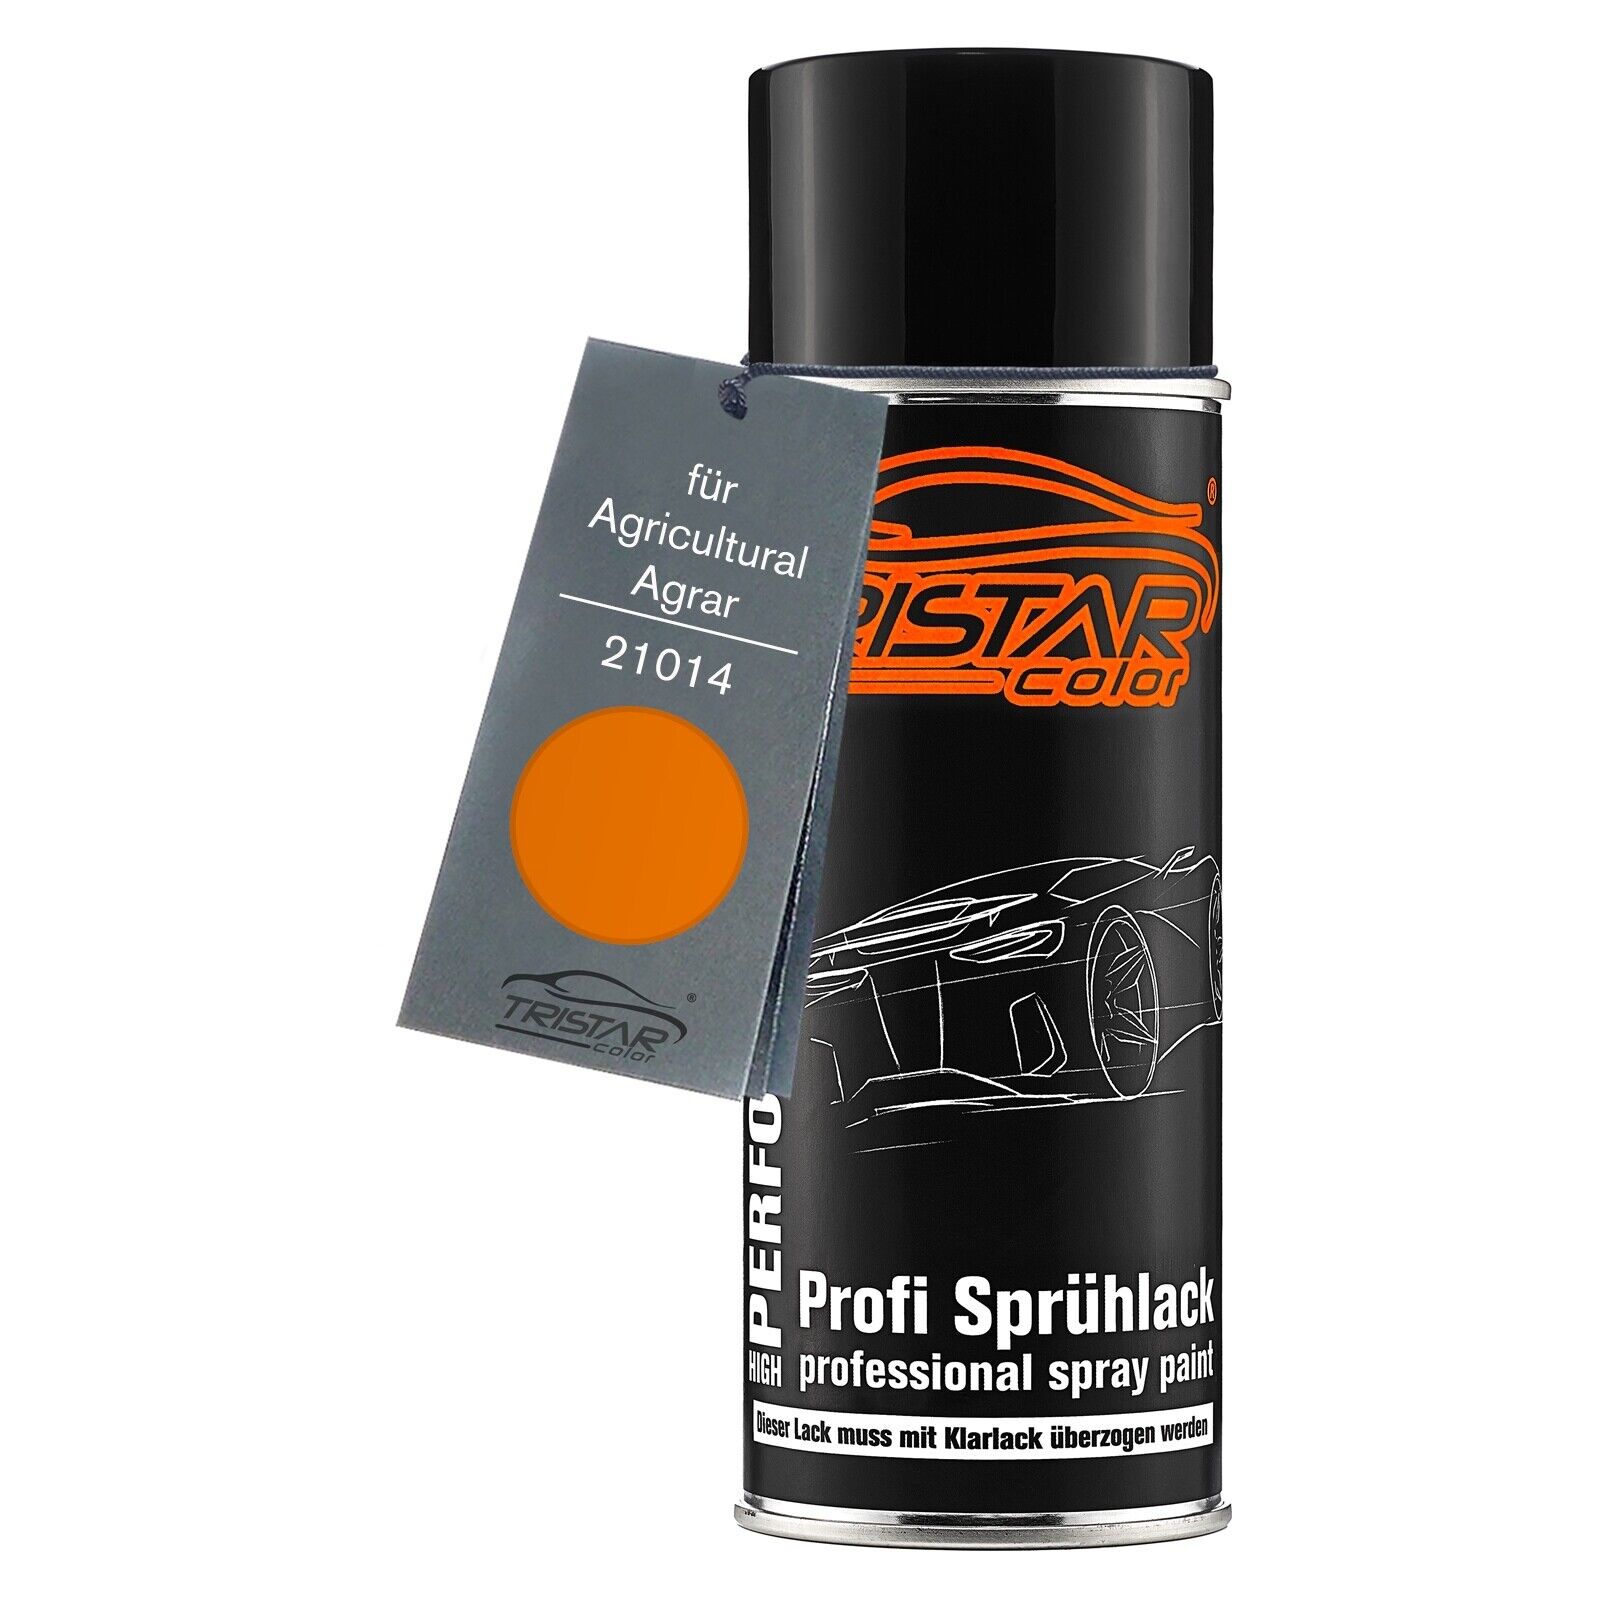 Autolack Spraydose für Agricultural Agrar 21014 Asea Oranje Basislack Sprühdose